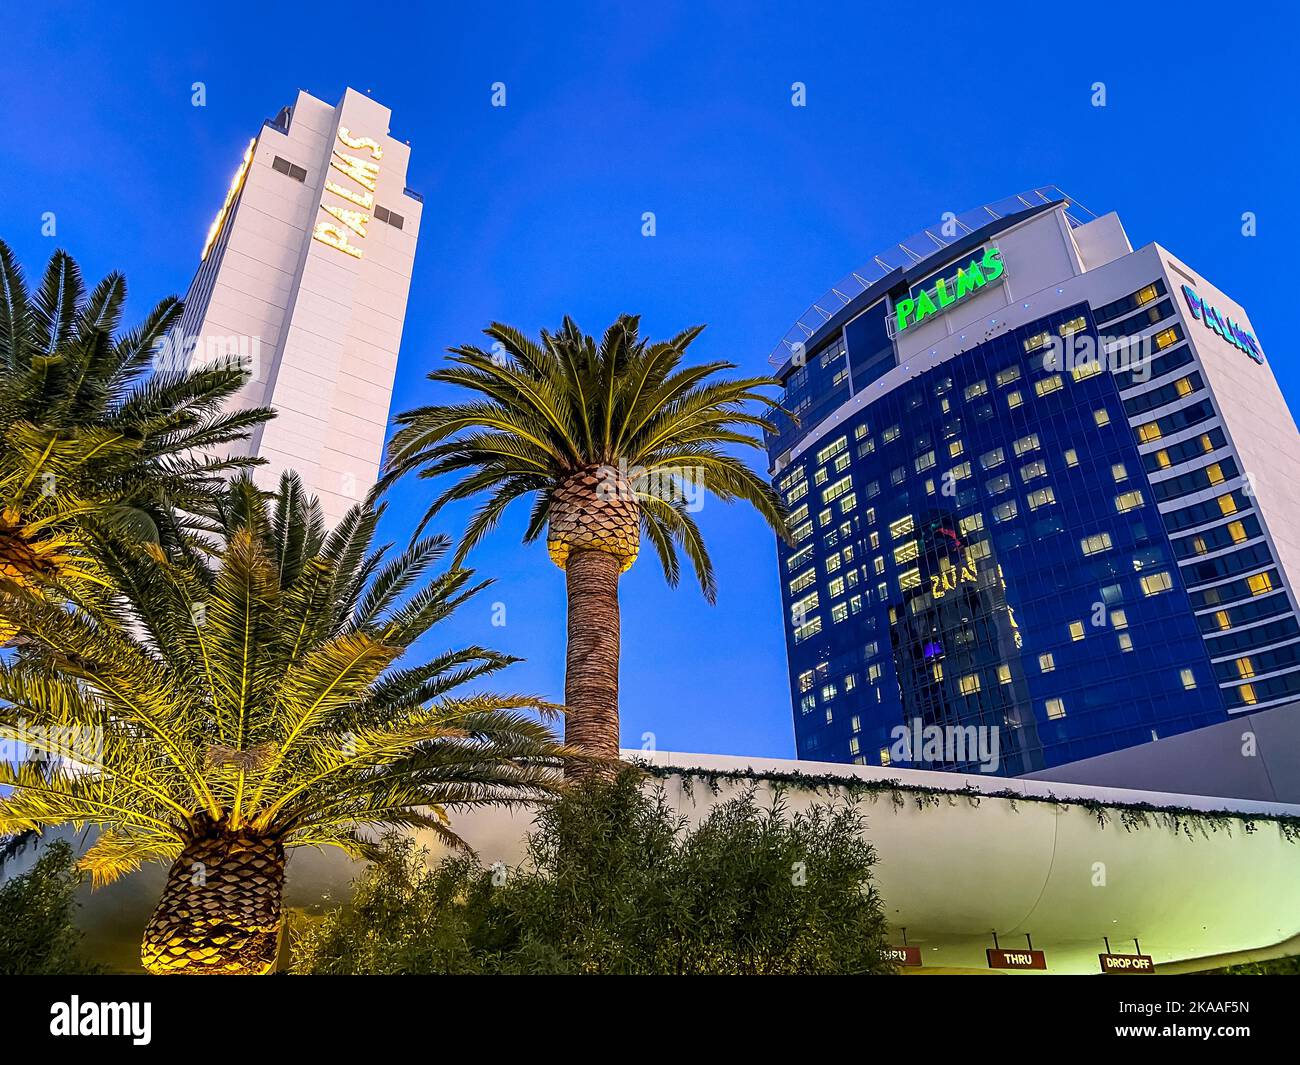 First tribal casino opens in Las Vegas